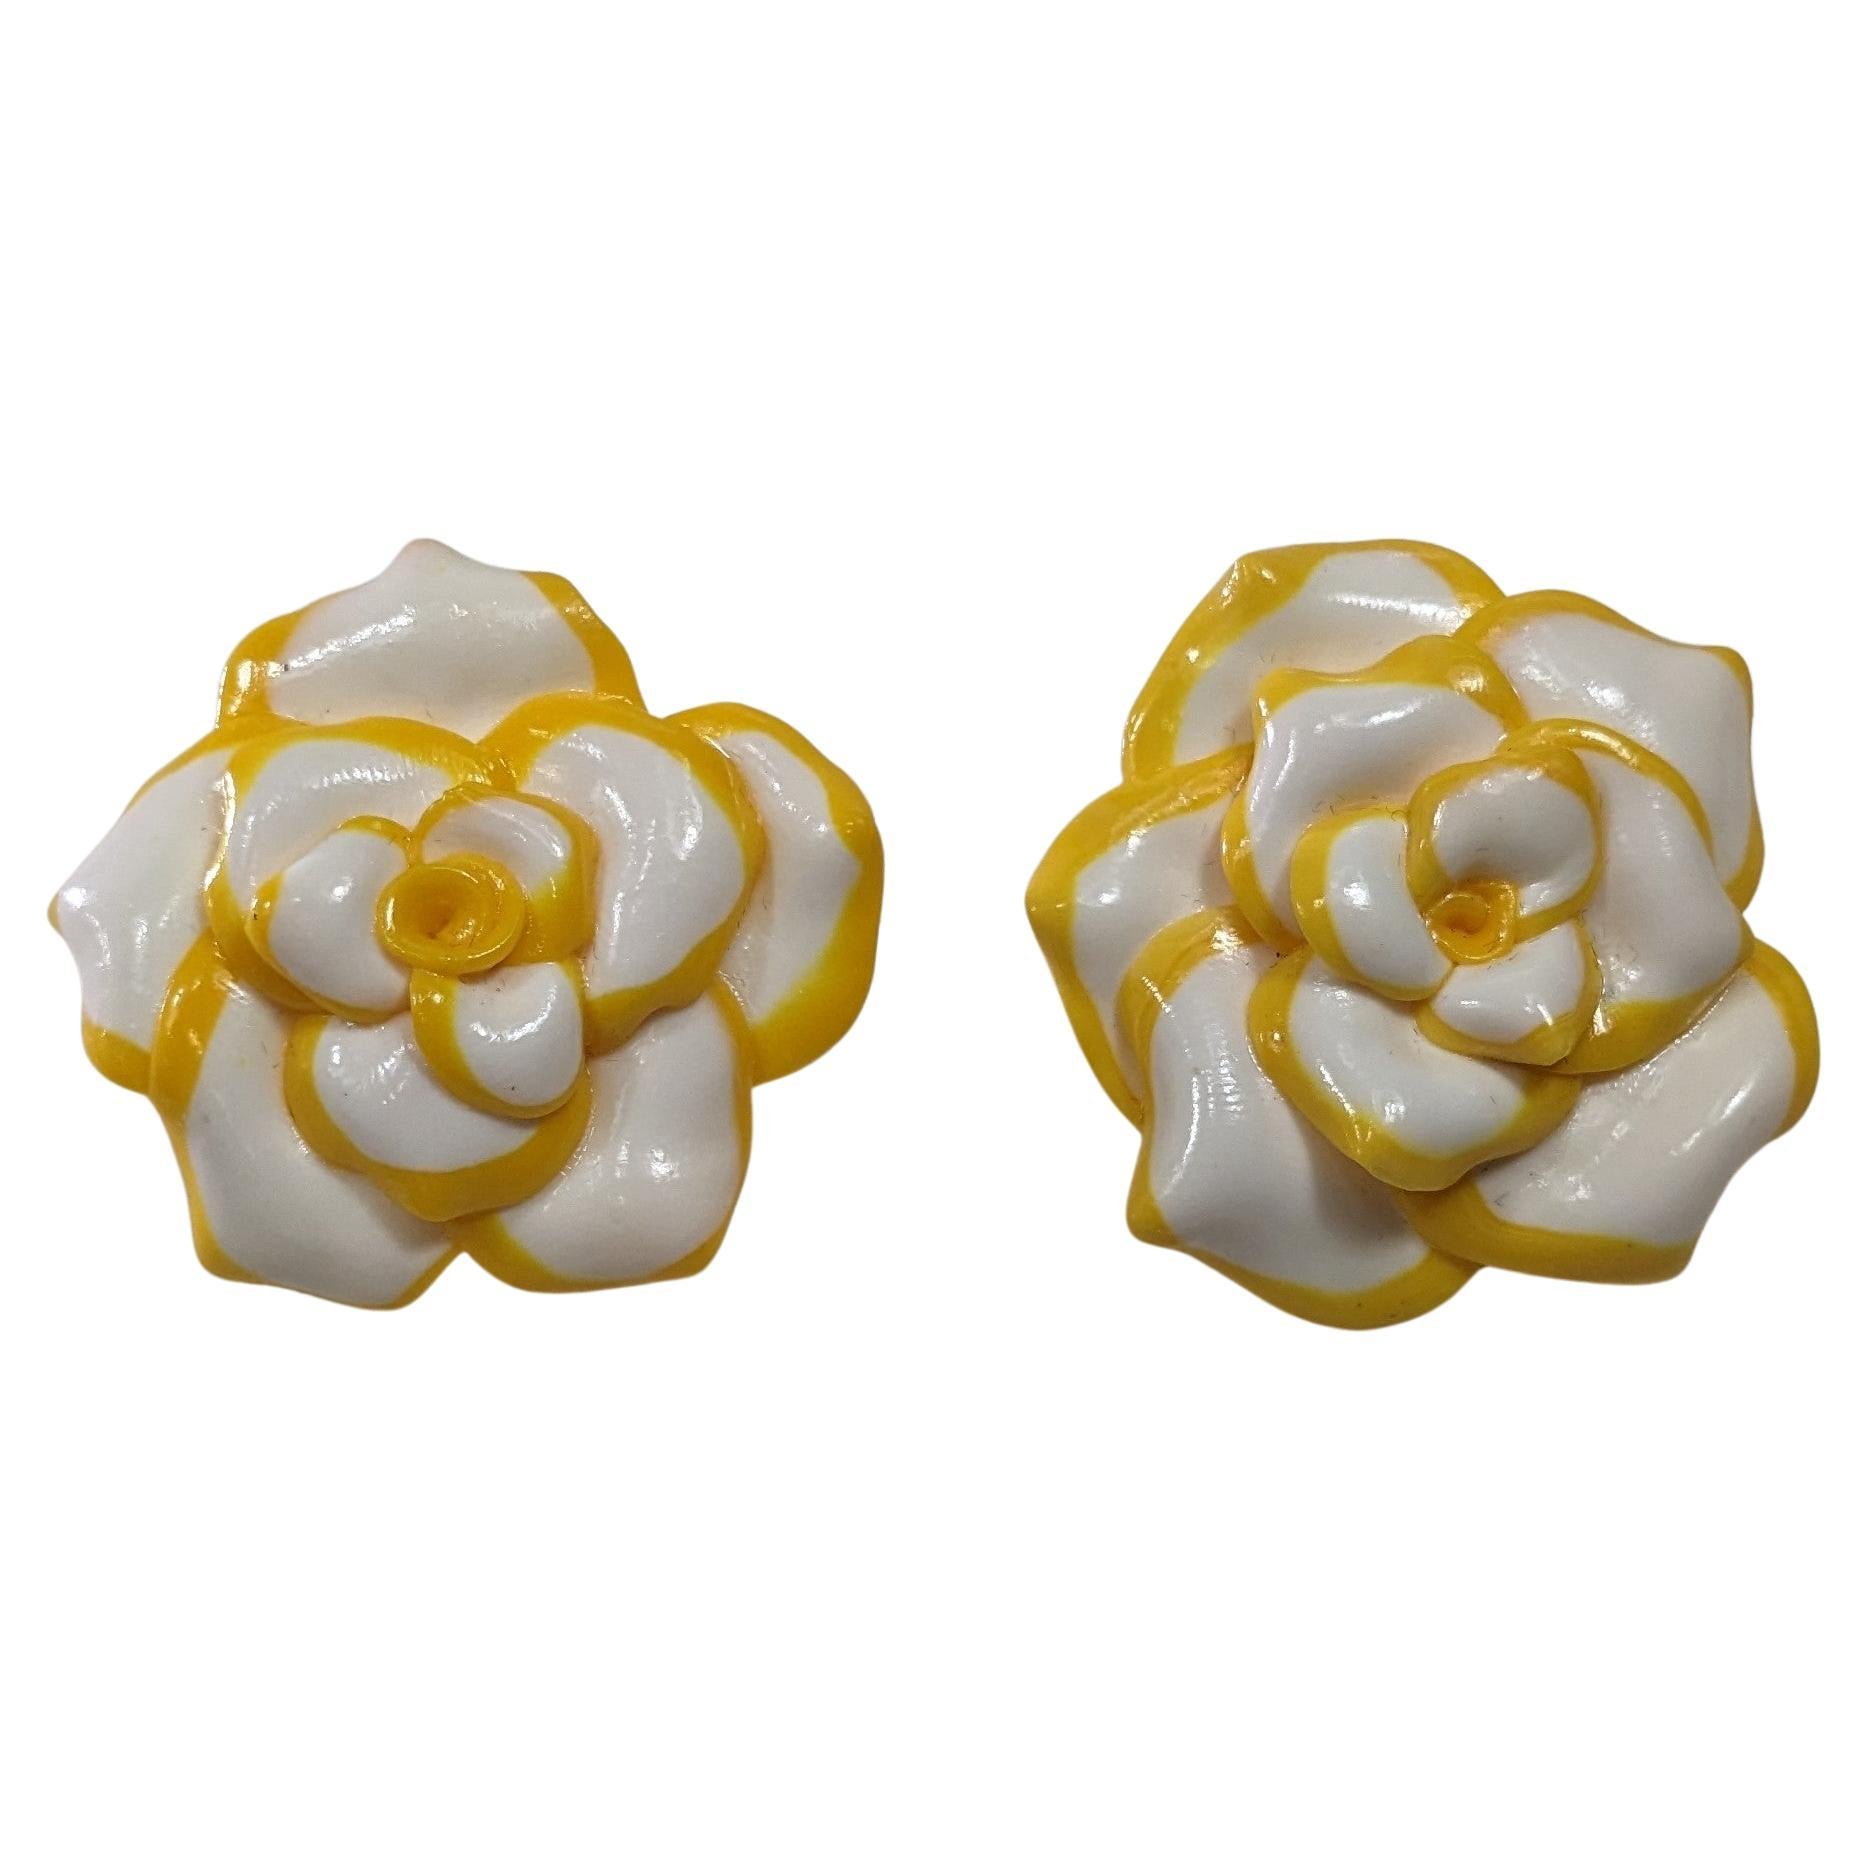 Chanel Camellia White Agate Flower Earrings in 18K Yellow Gold